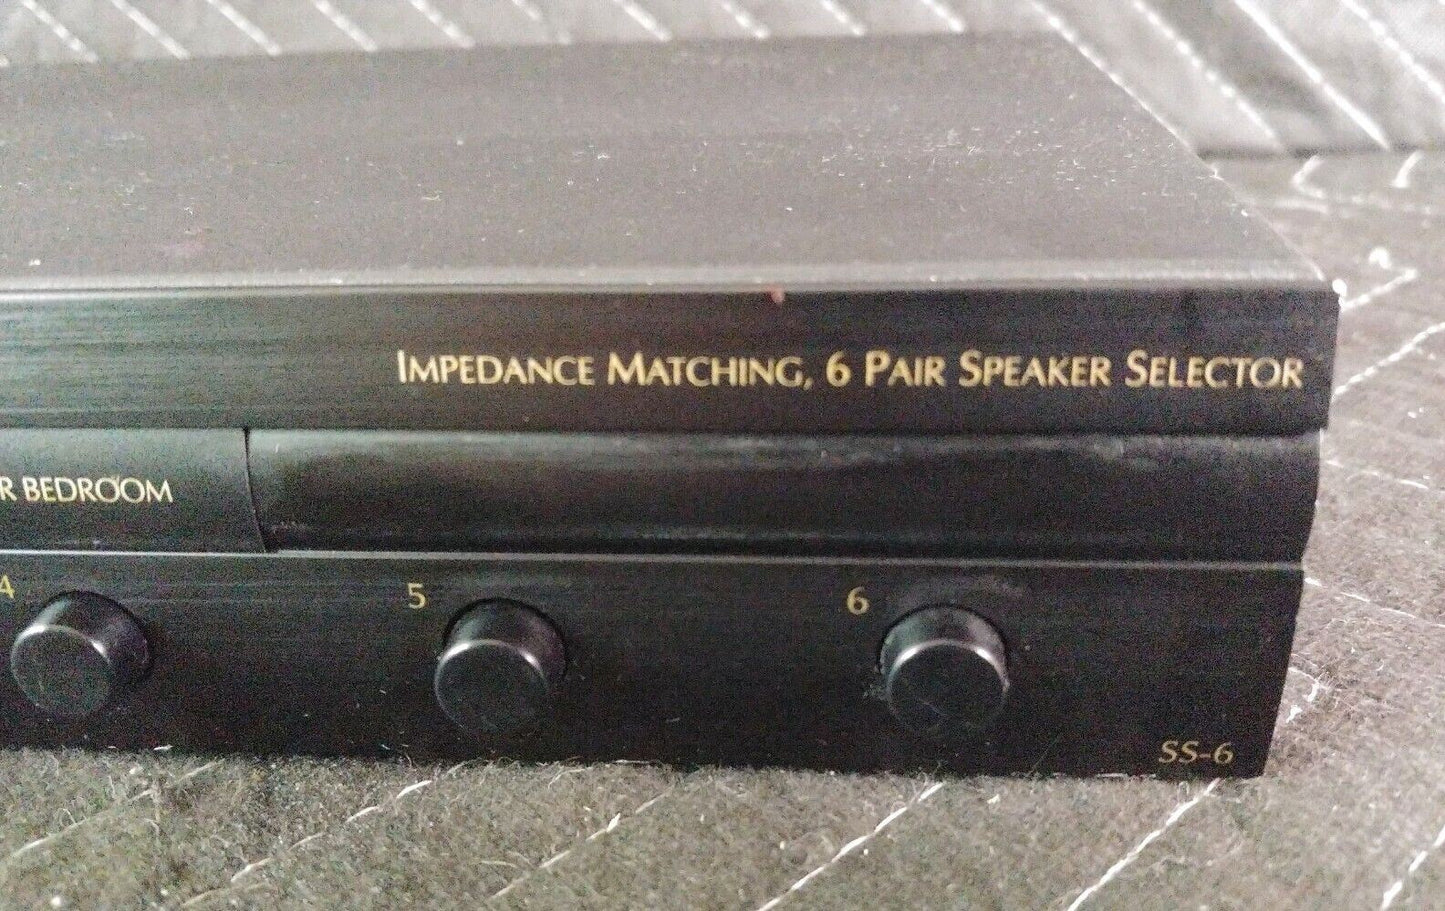 Russound Impedance Matching 6 Pair Speaker Selector Model SS-6